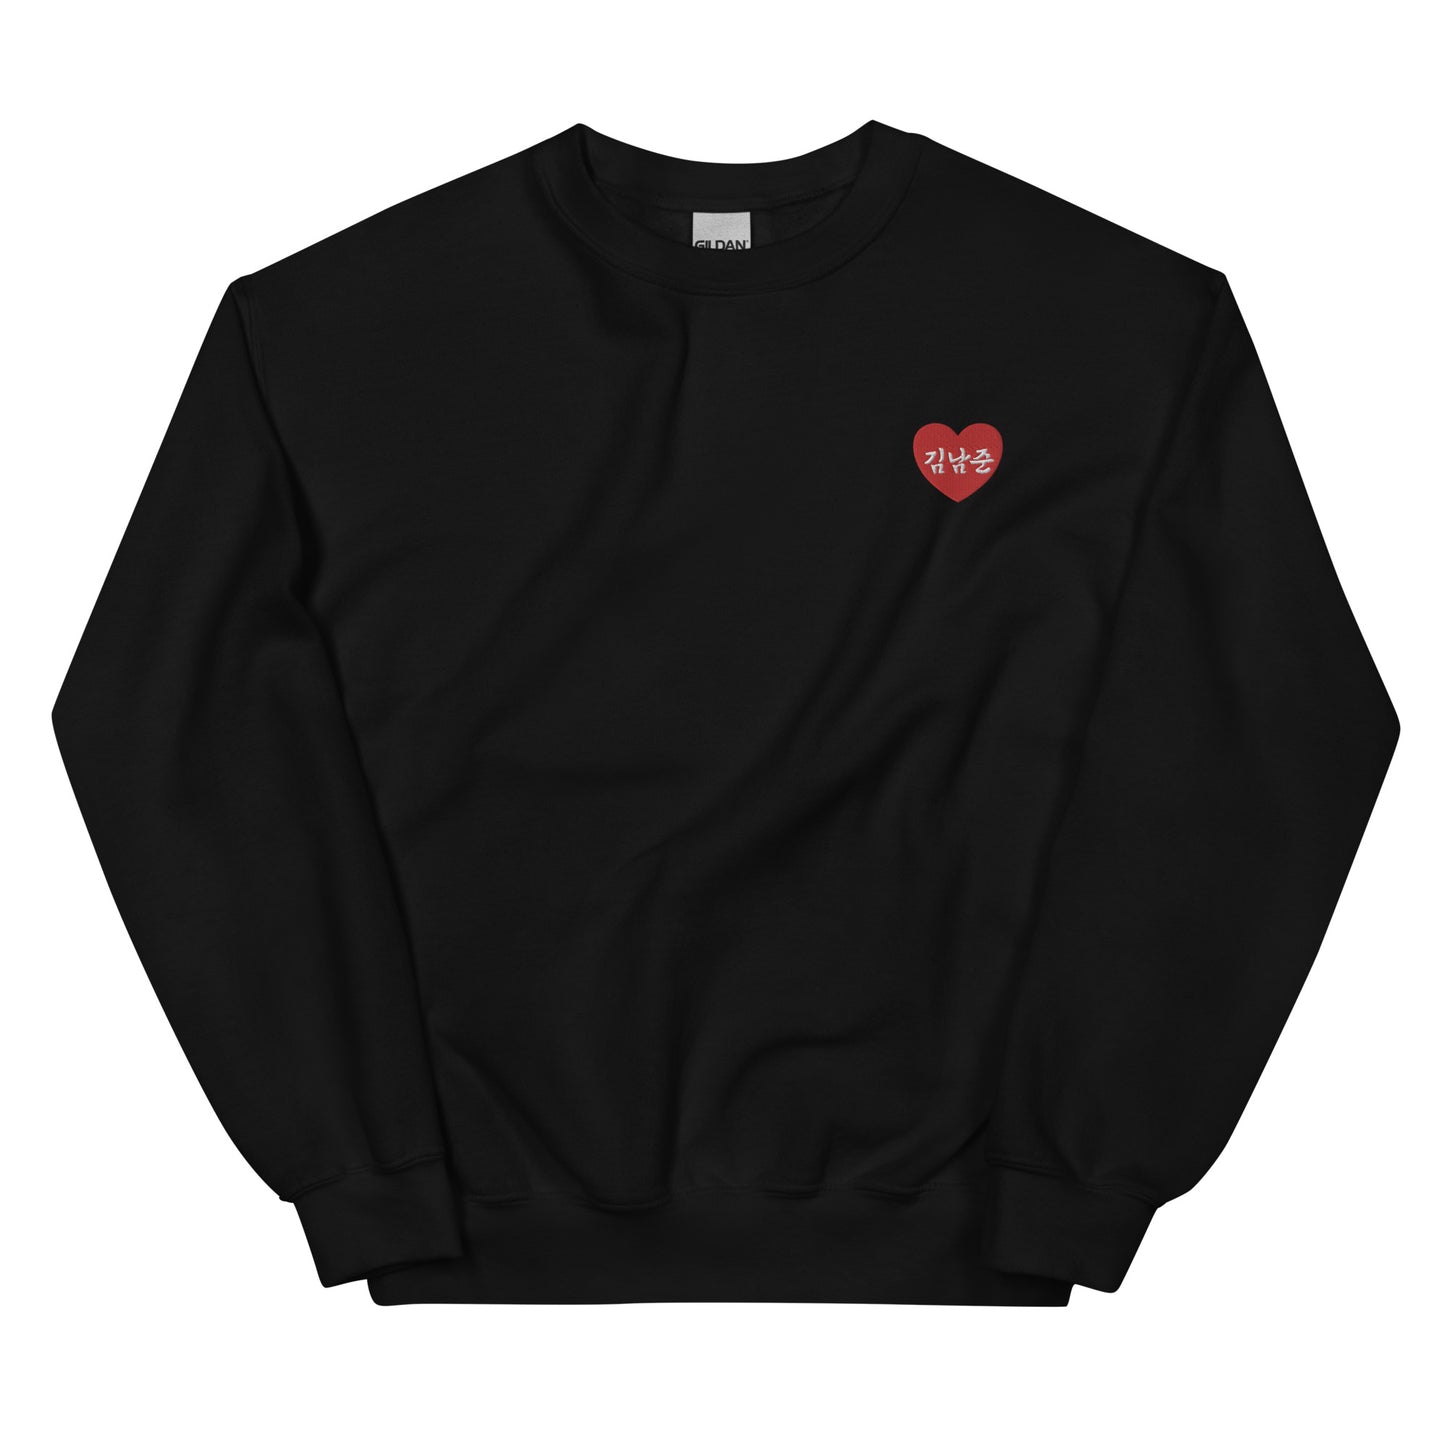 RM in Korean Kpop BTS Merch Embroidery Unisex Sweatshirt